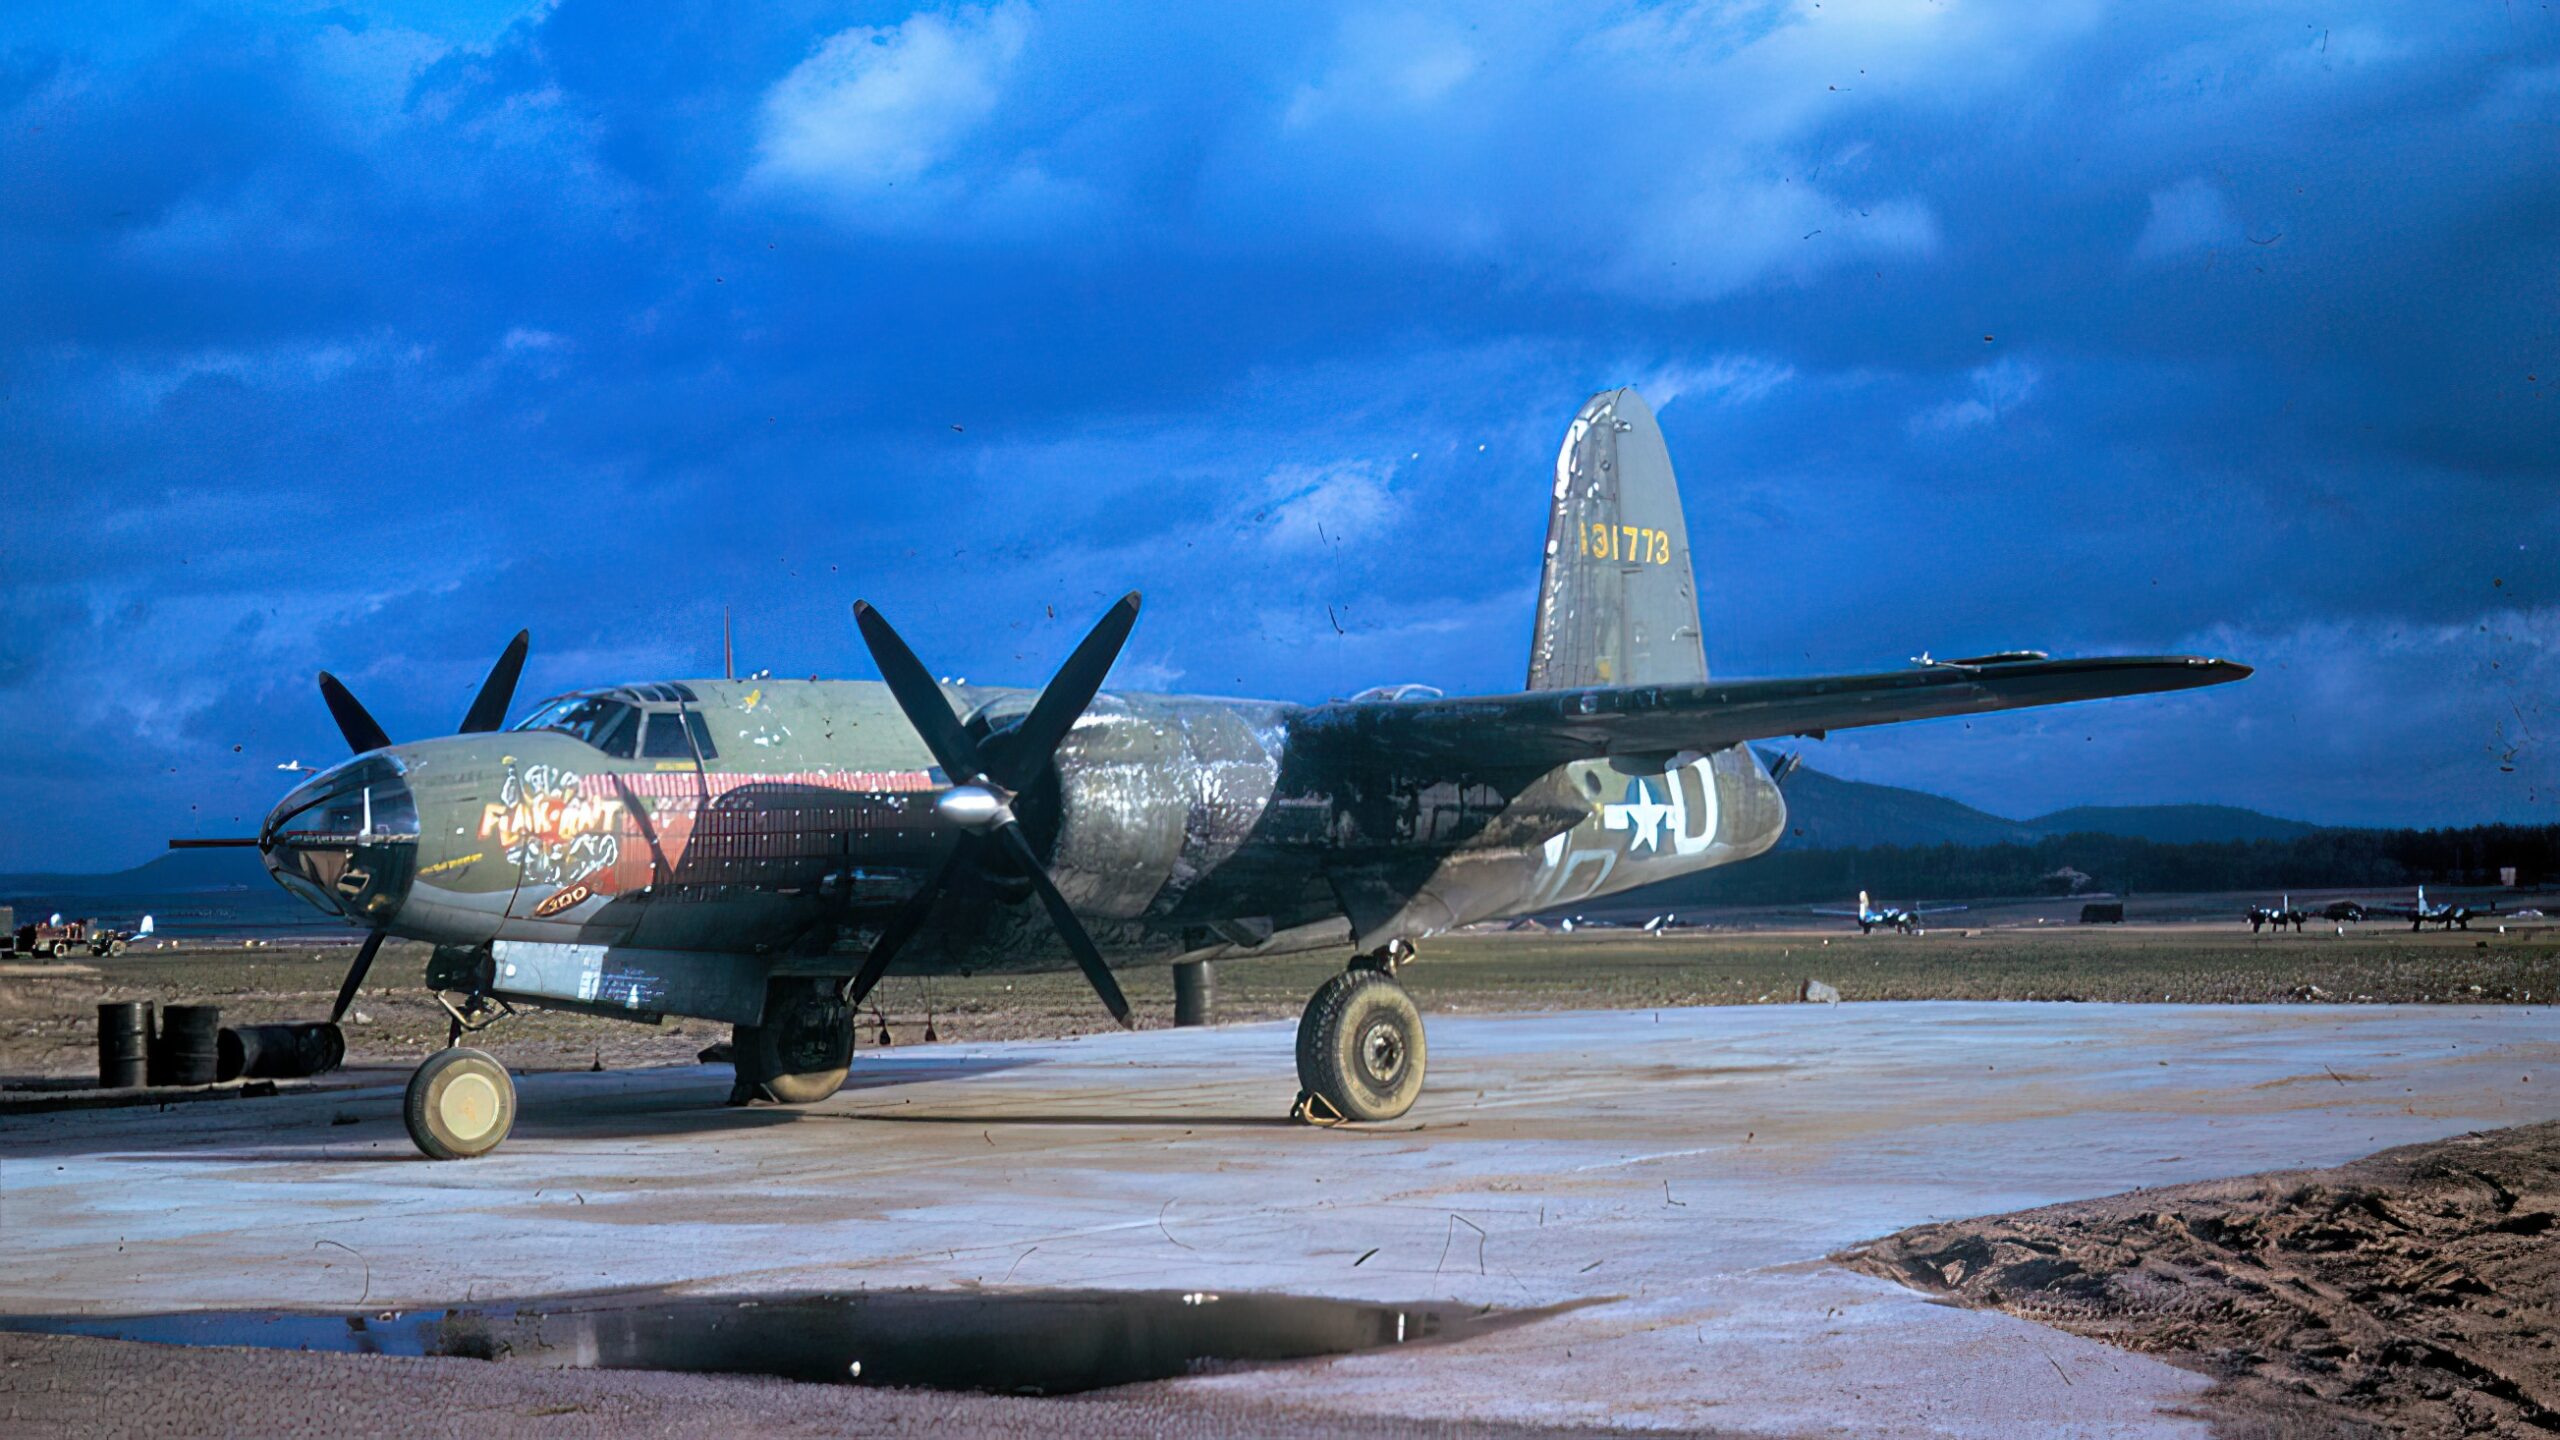 B-26 Marauder (serial number 41-31773) nicknamed "Flak Bait" of the 322nd Bomb Group, Andrews Field Aerodrome, England